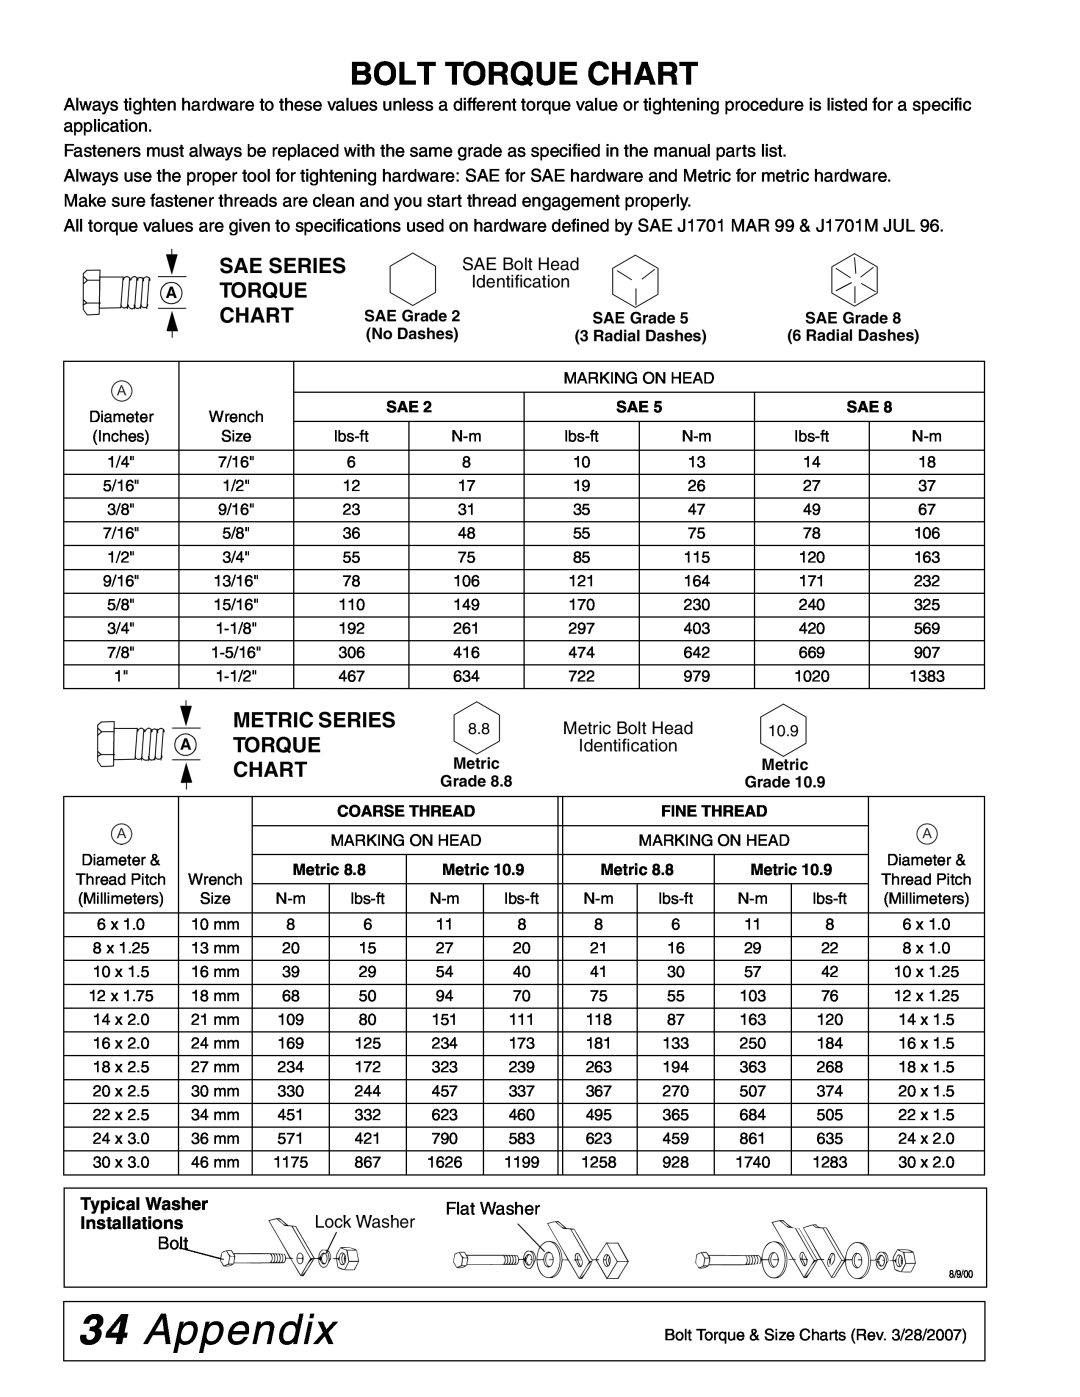 Woods Equipment LU126 34Appendix, Bolt Torque Chart, Sae Series A Torque Chart, Metric Series, Typical Washer 